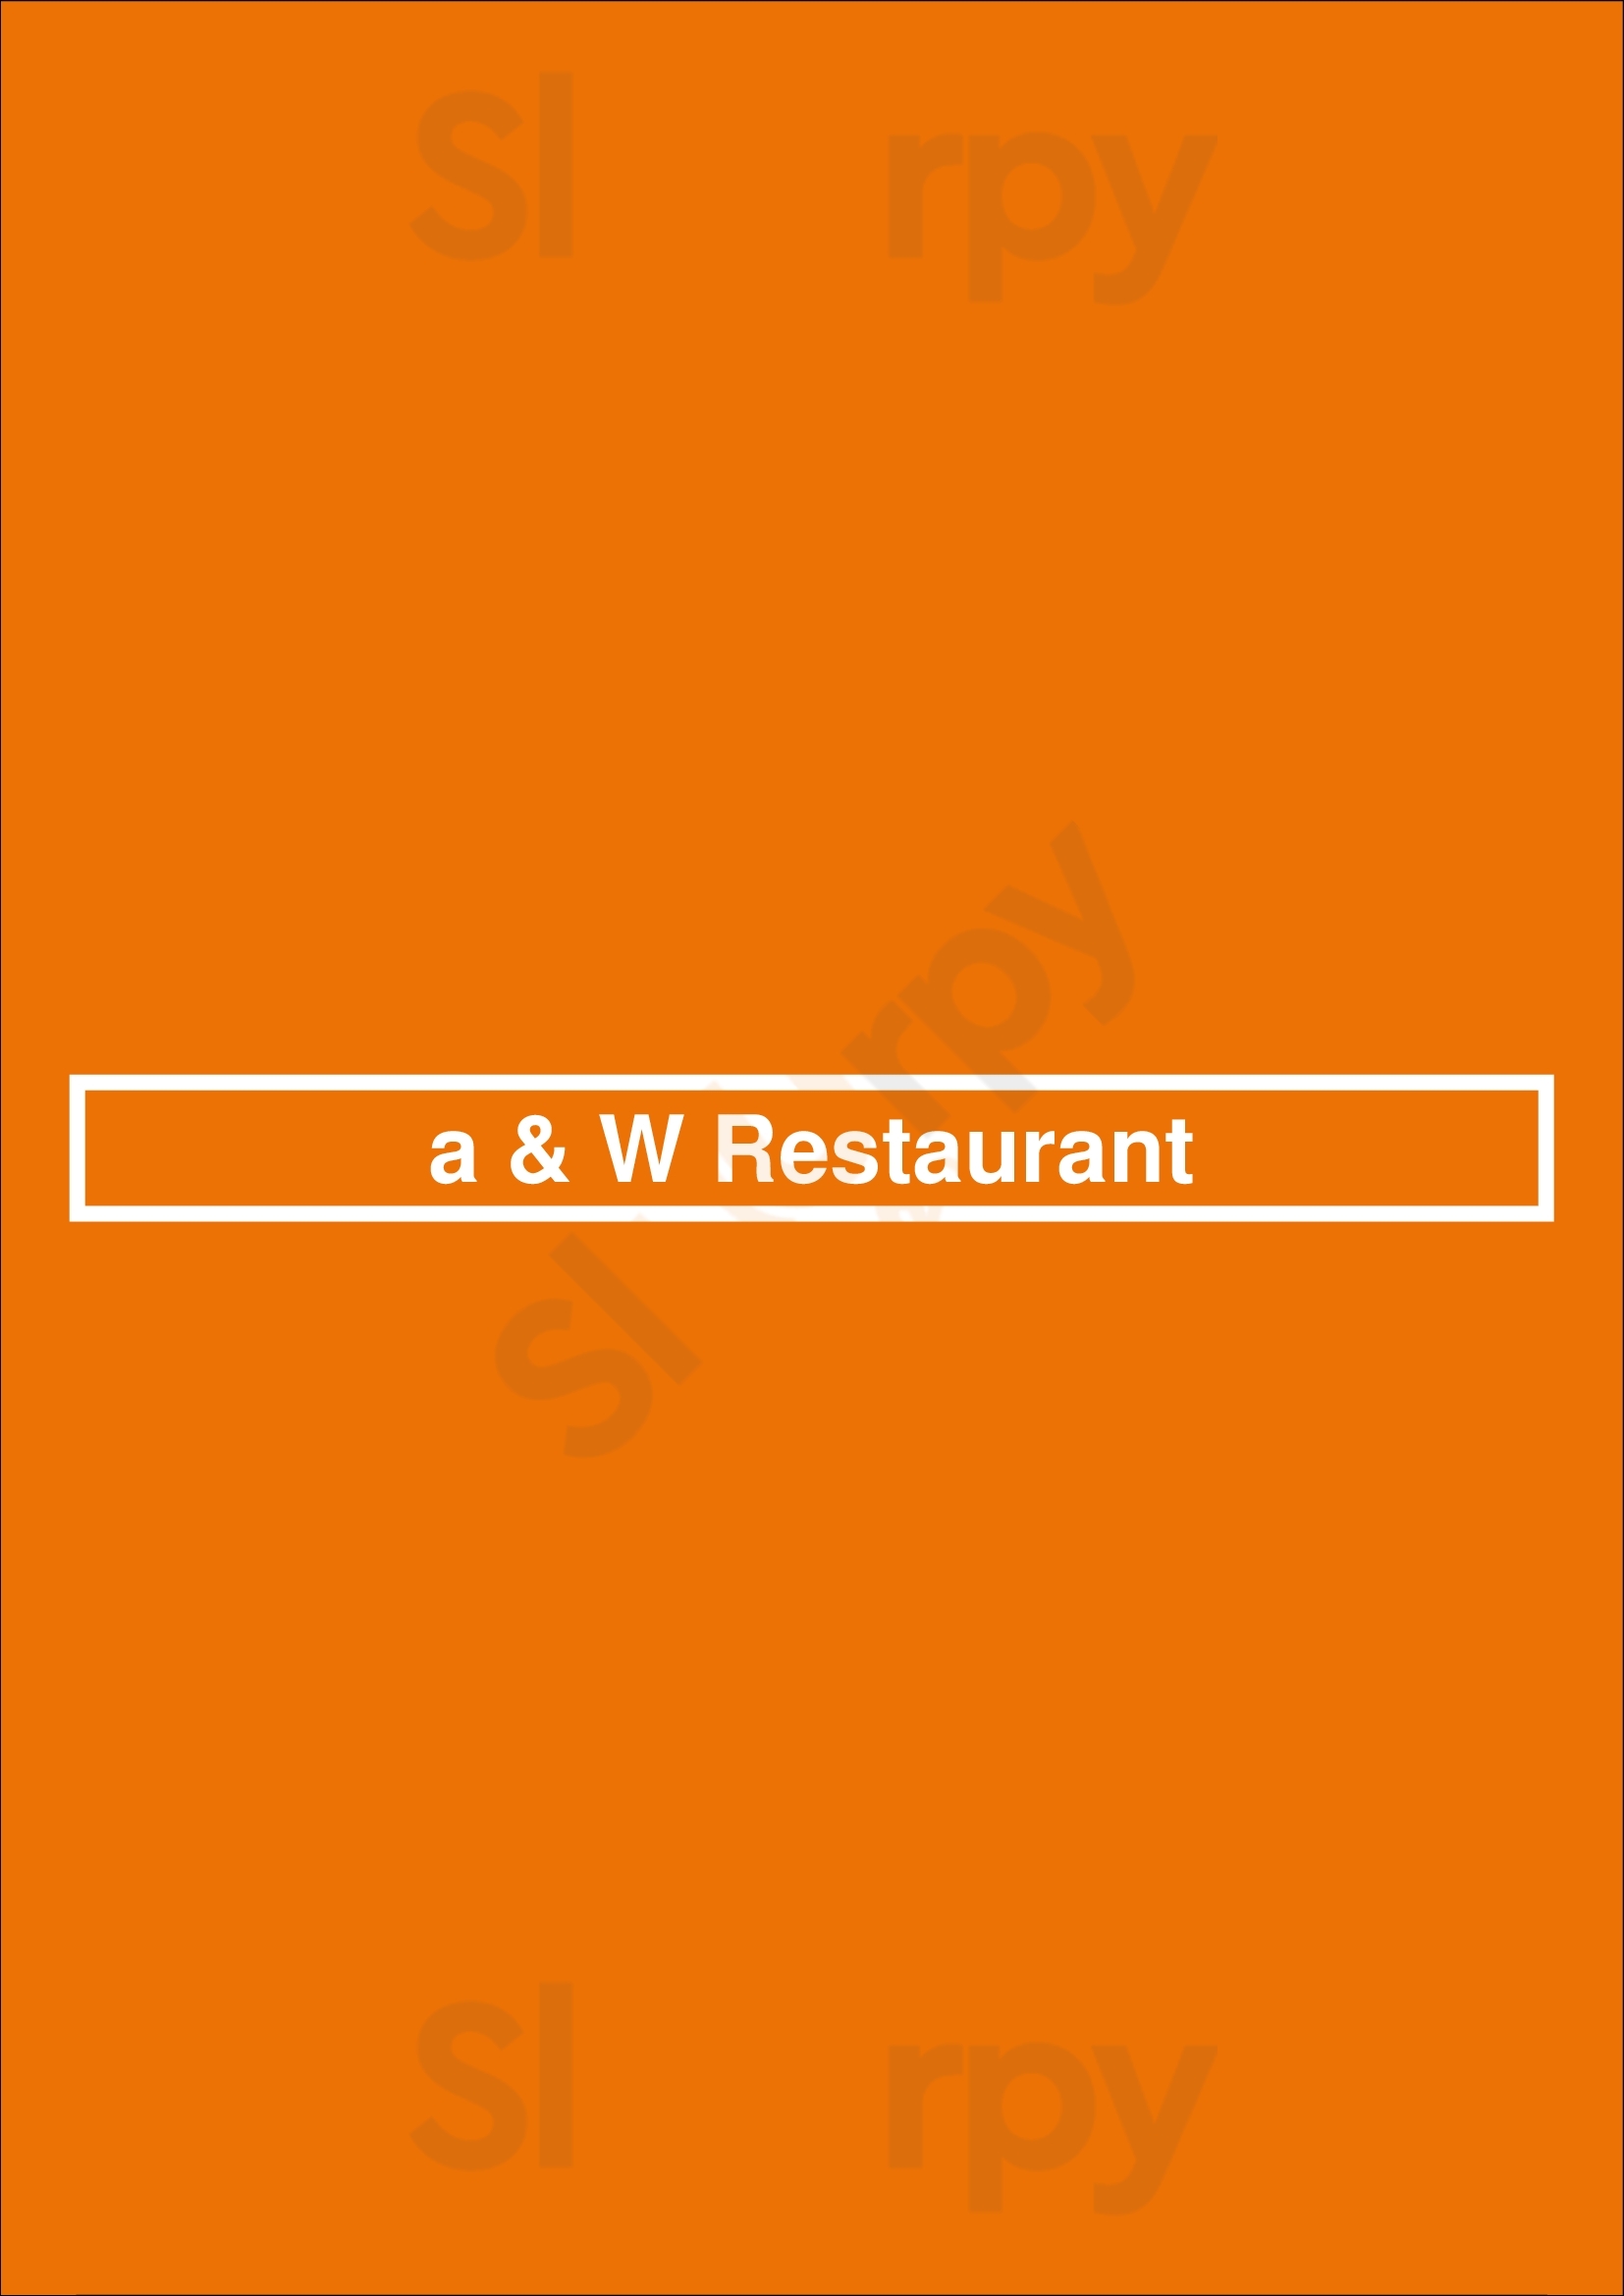 A & W Restaurant London Menu - 1